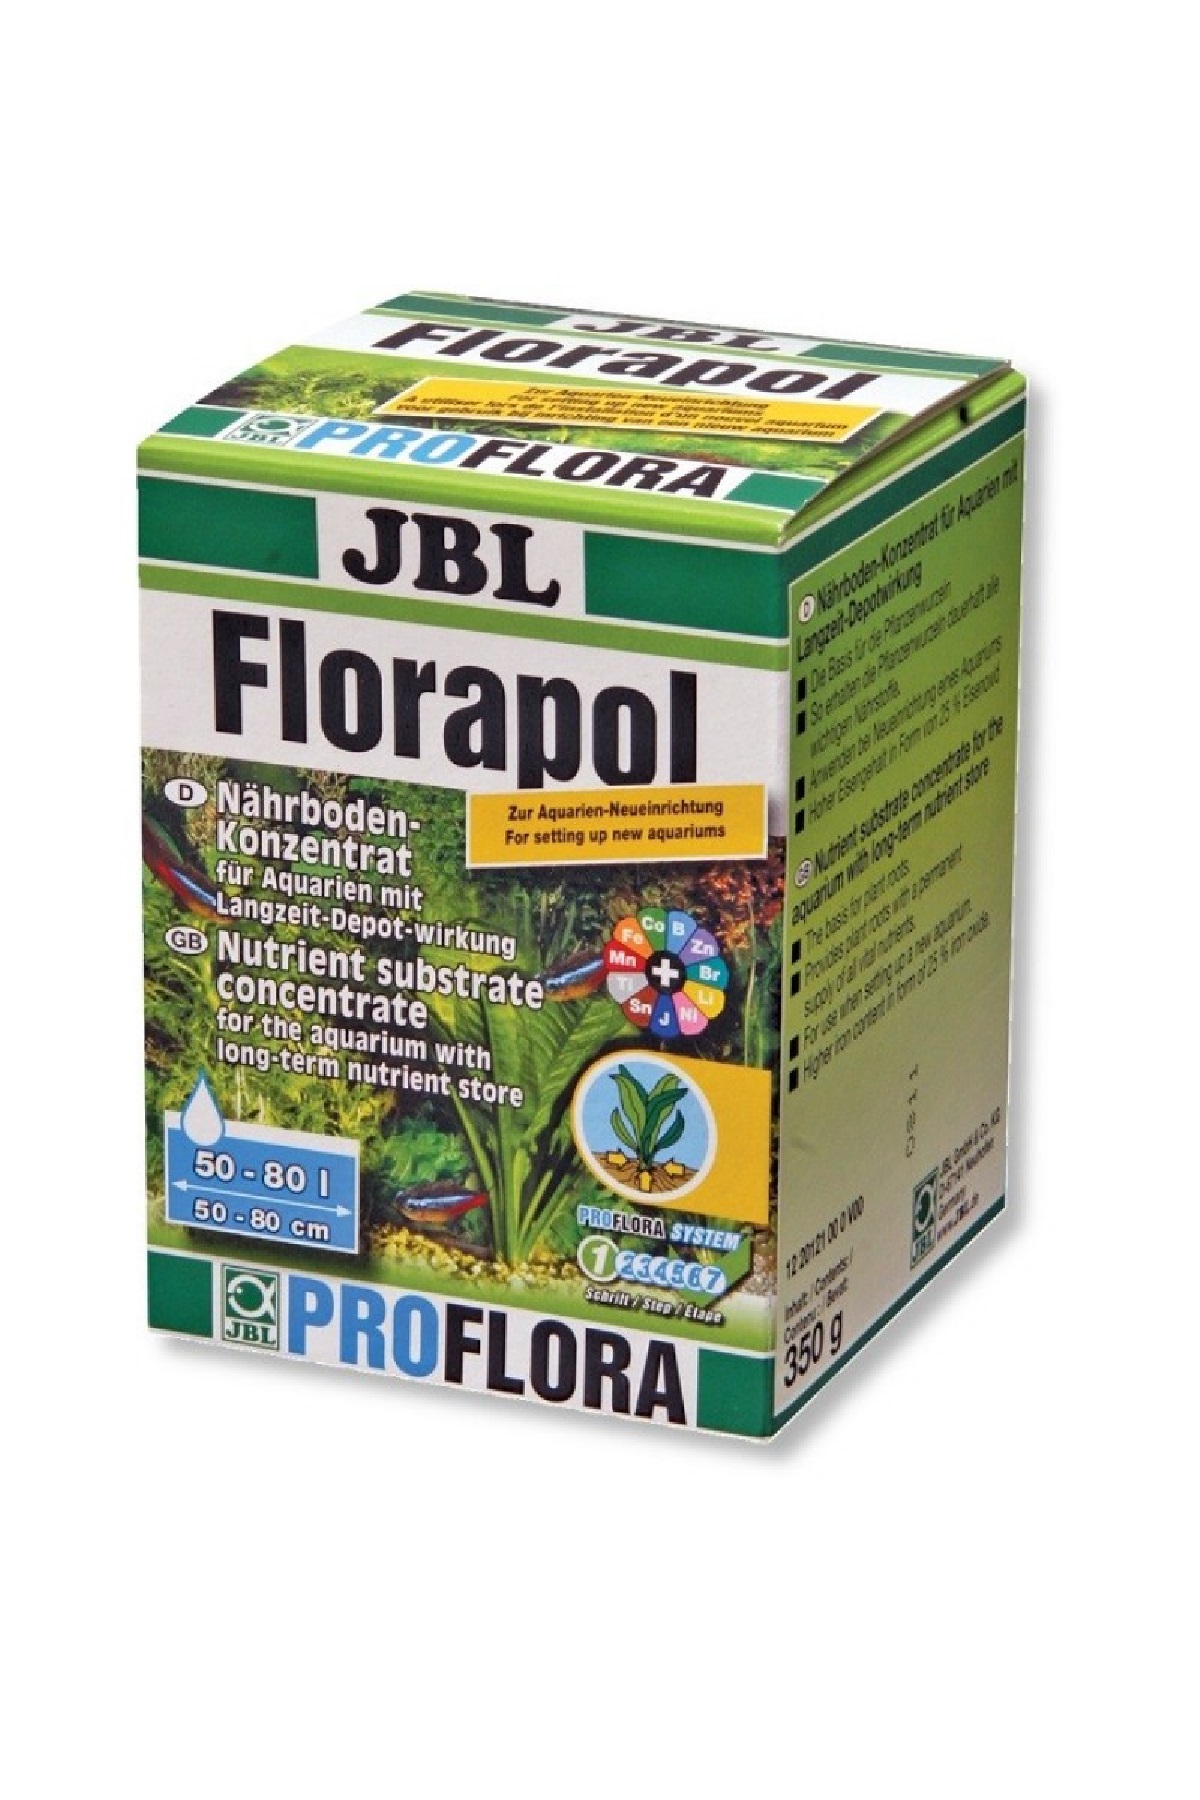 JBL PROFLORA Florapol